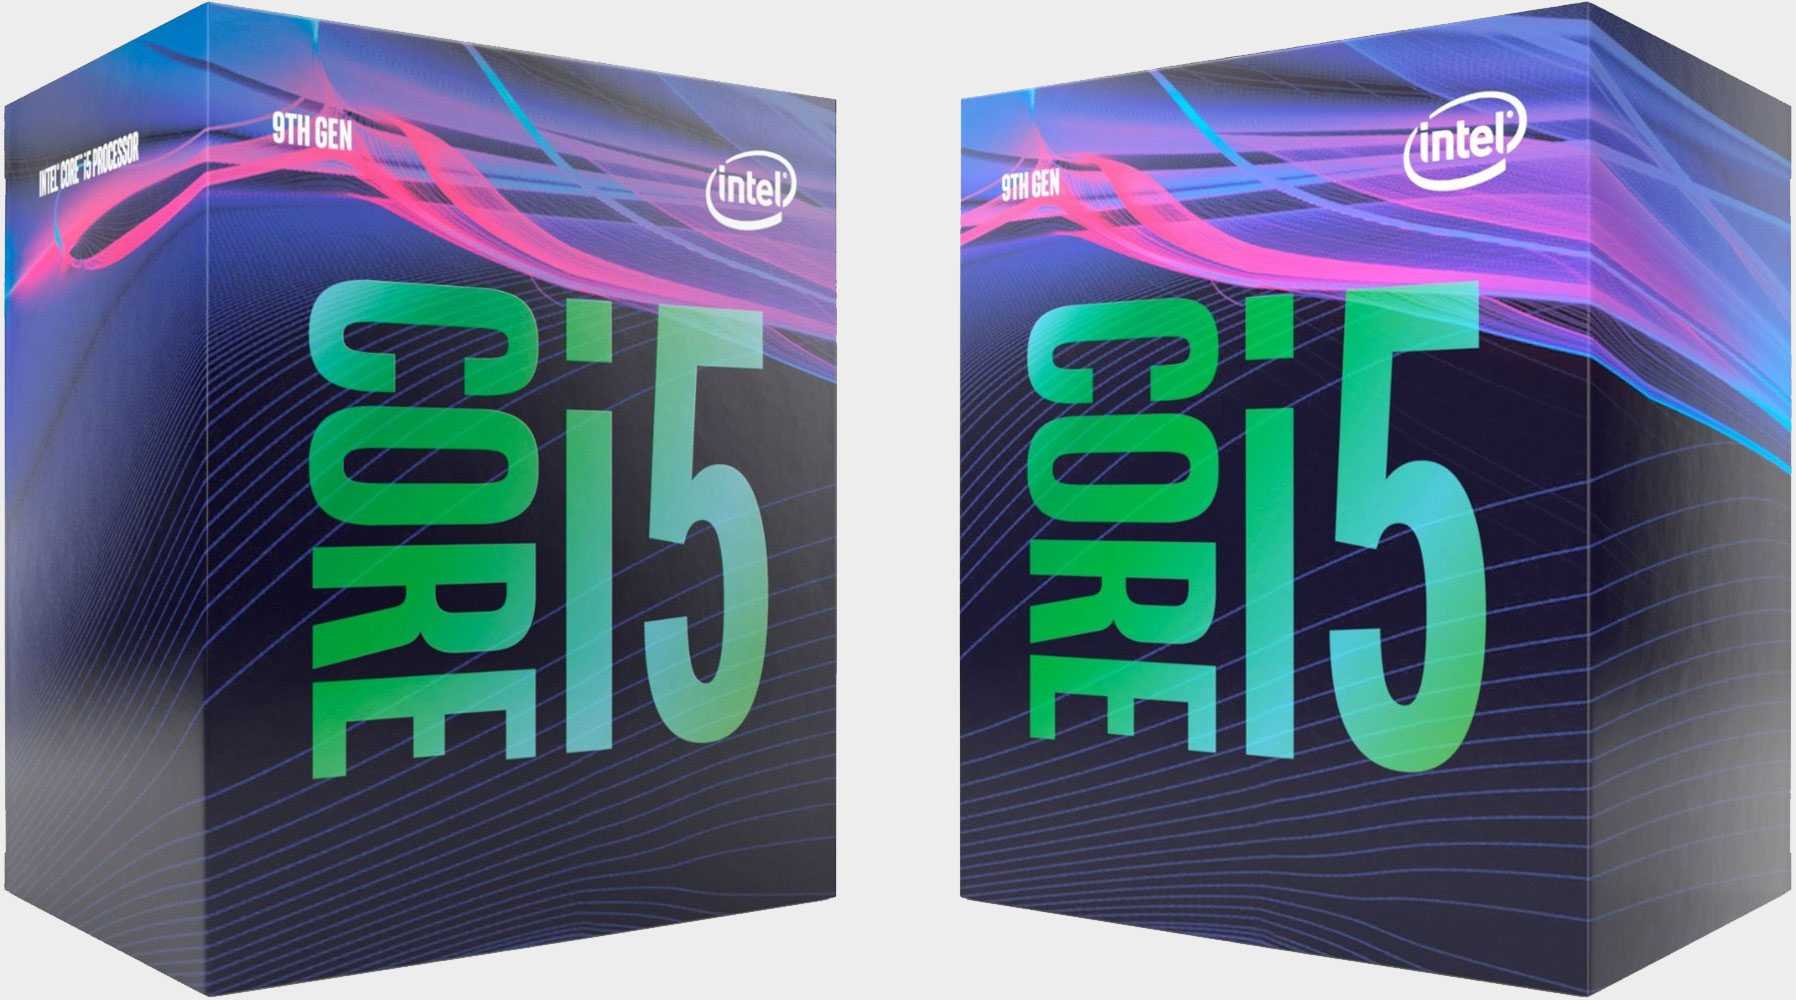 Intel core i59600kf processor 9m cache up to 4.60 ghz спецификации продукции